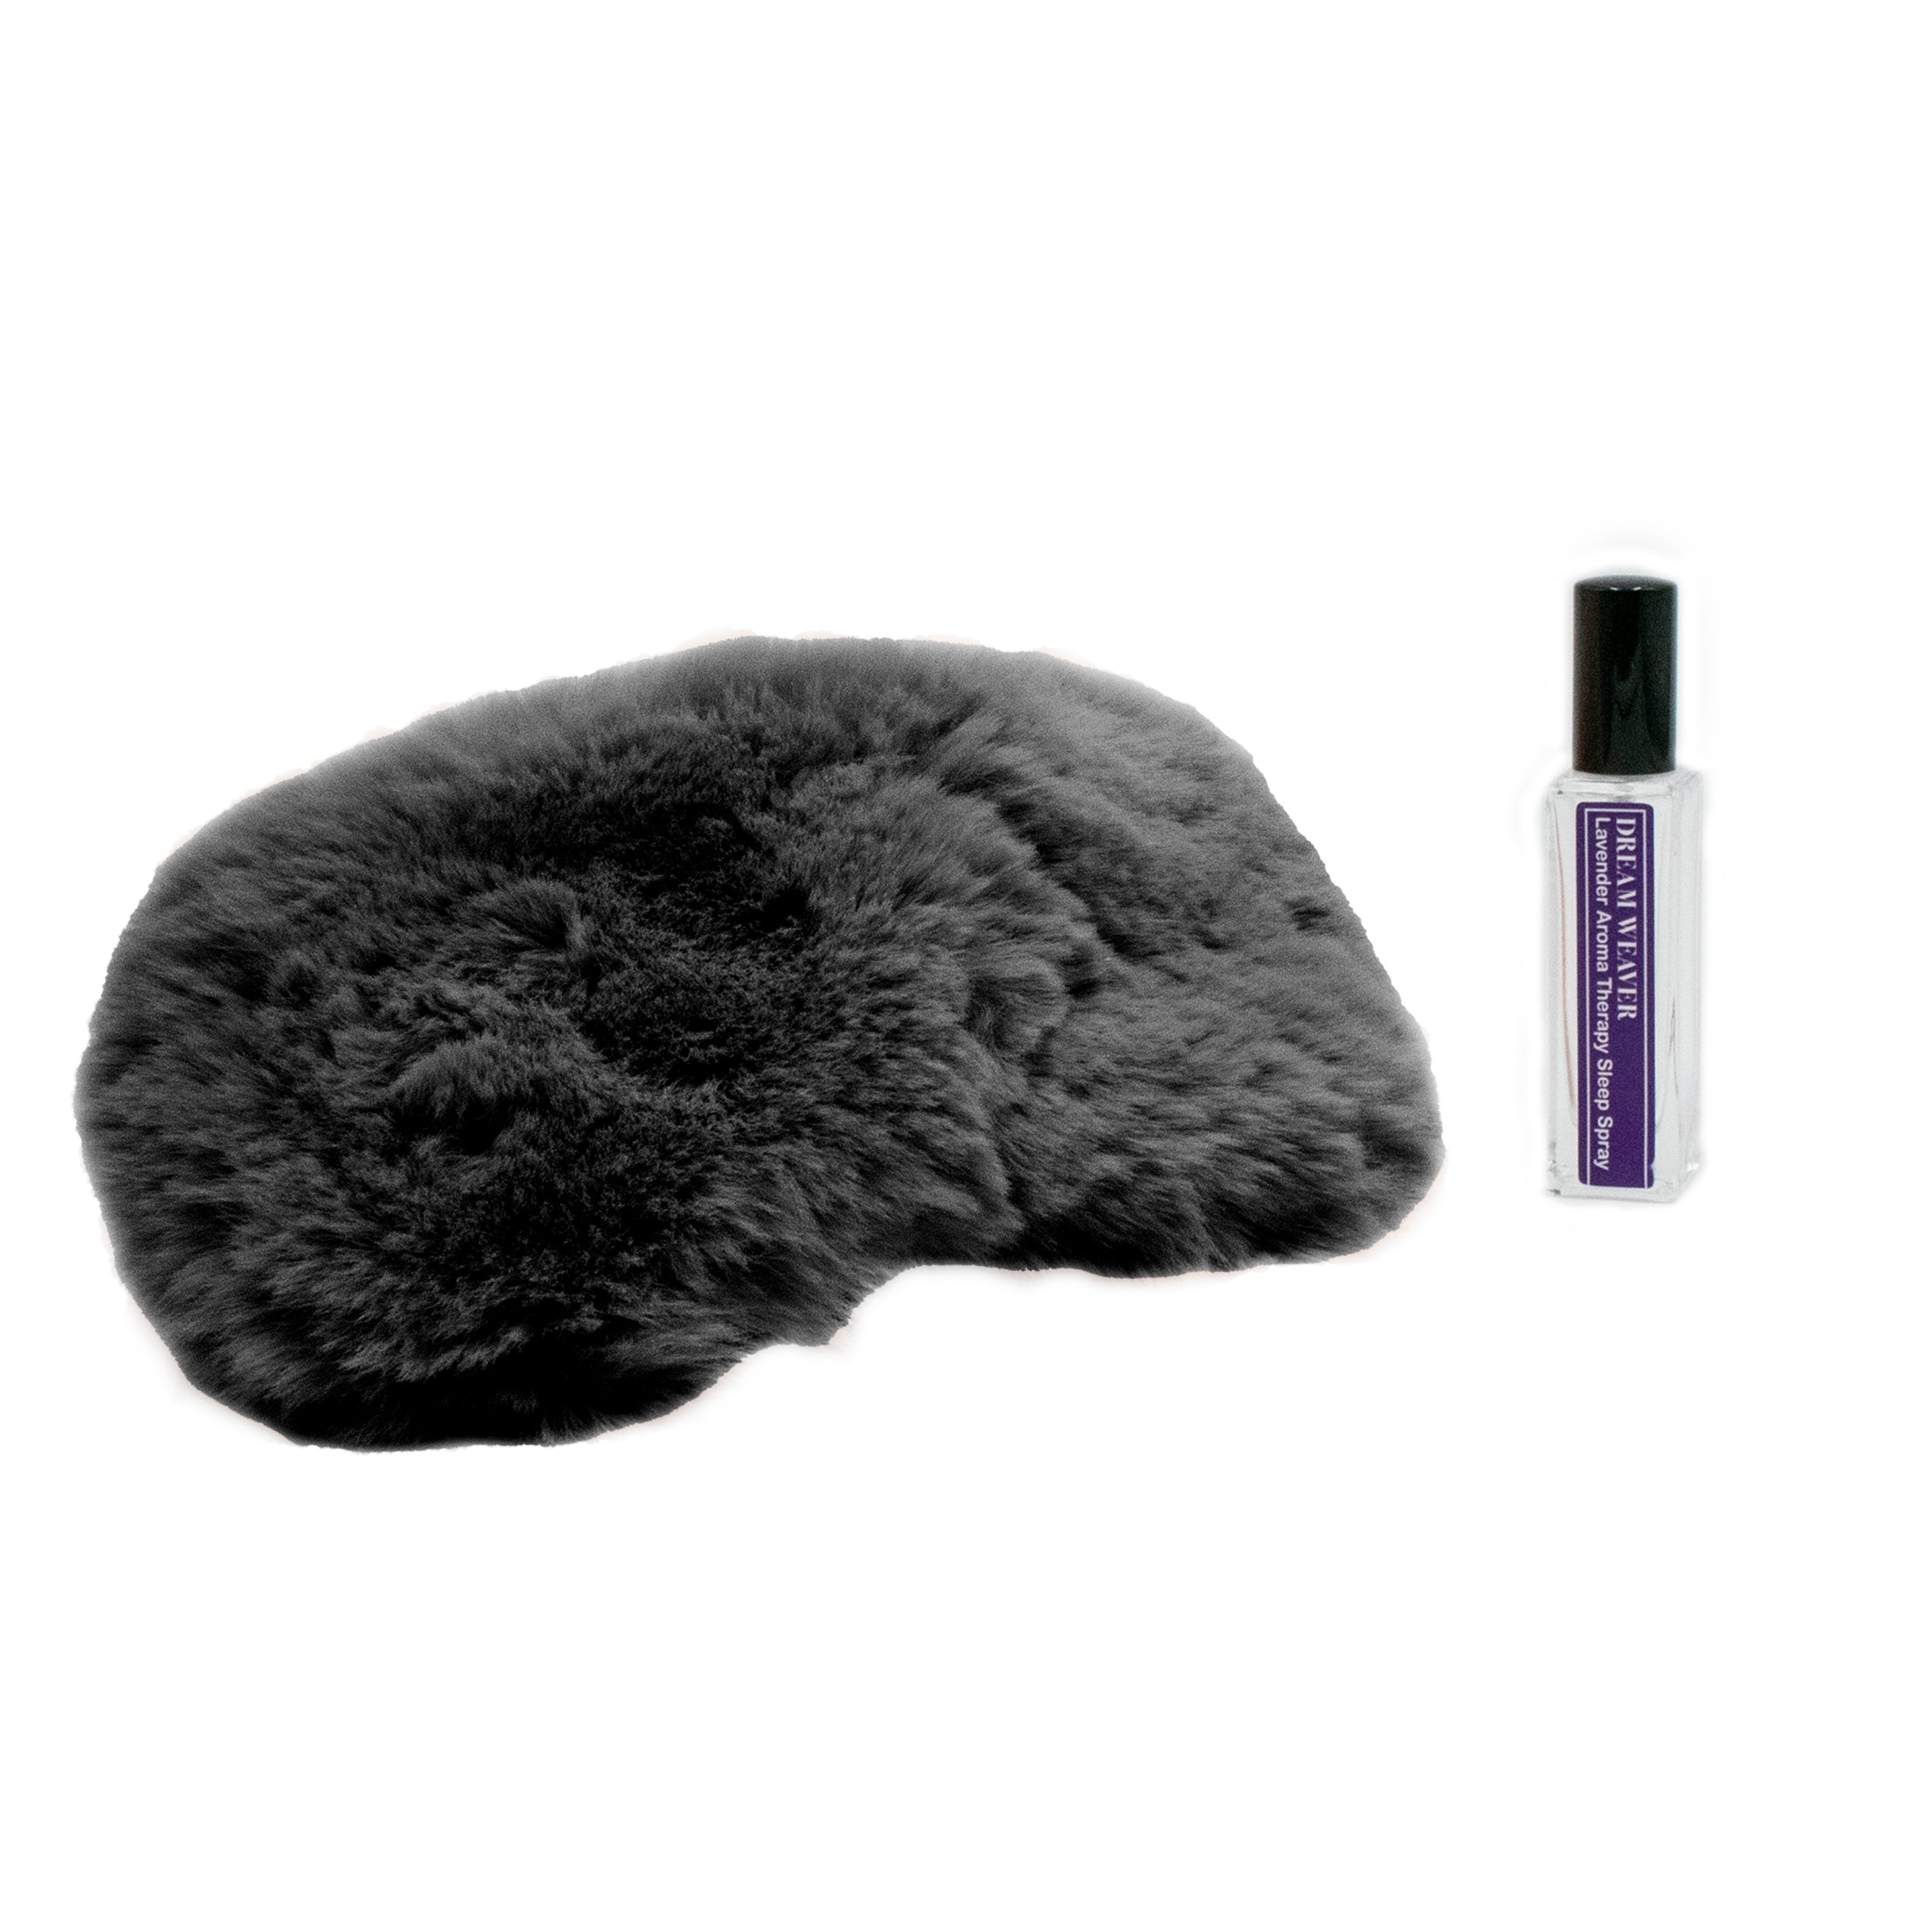 Minx Fur Sleep Mask with Lavender Essential Oil Spray Black